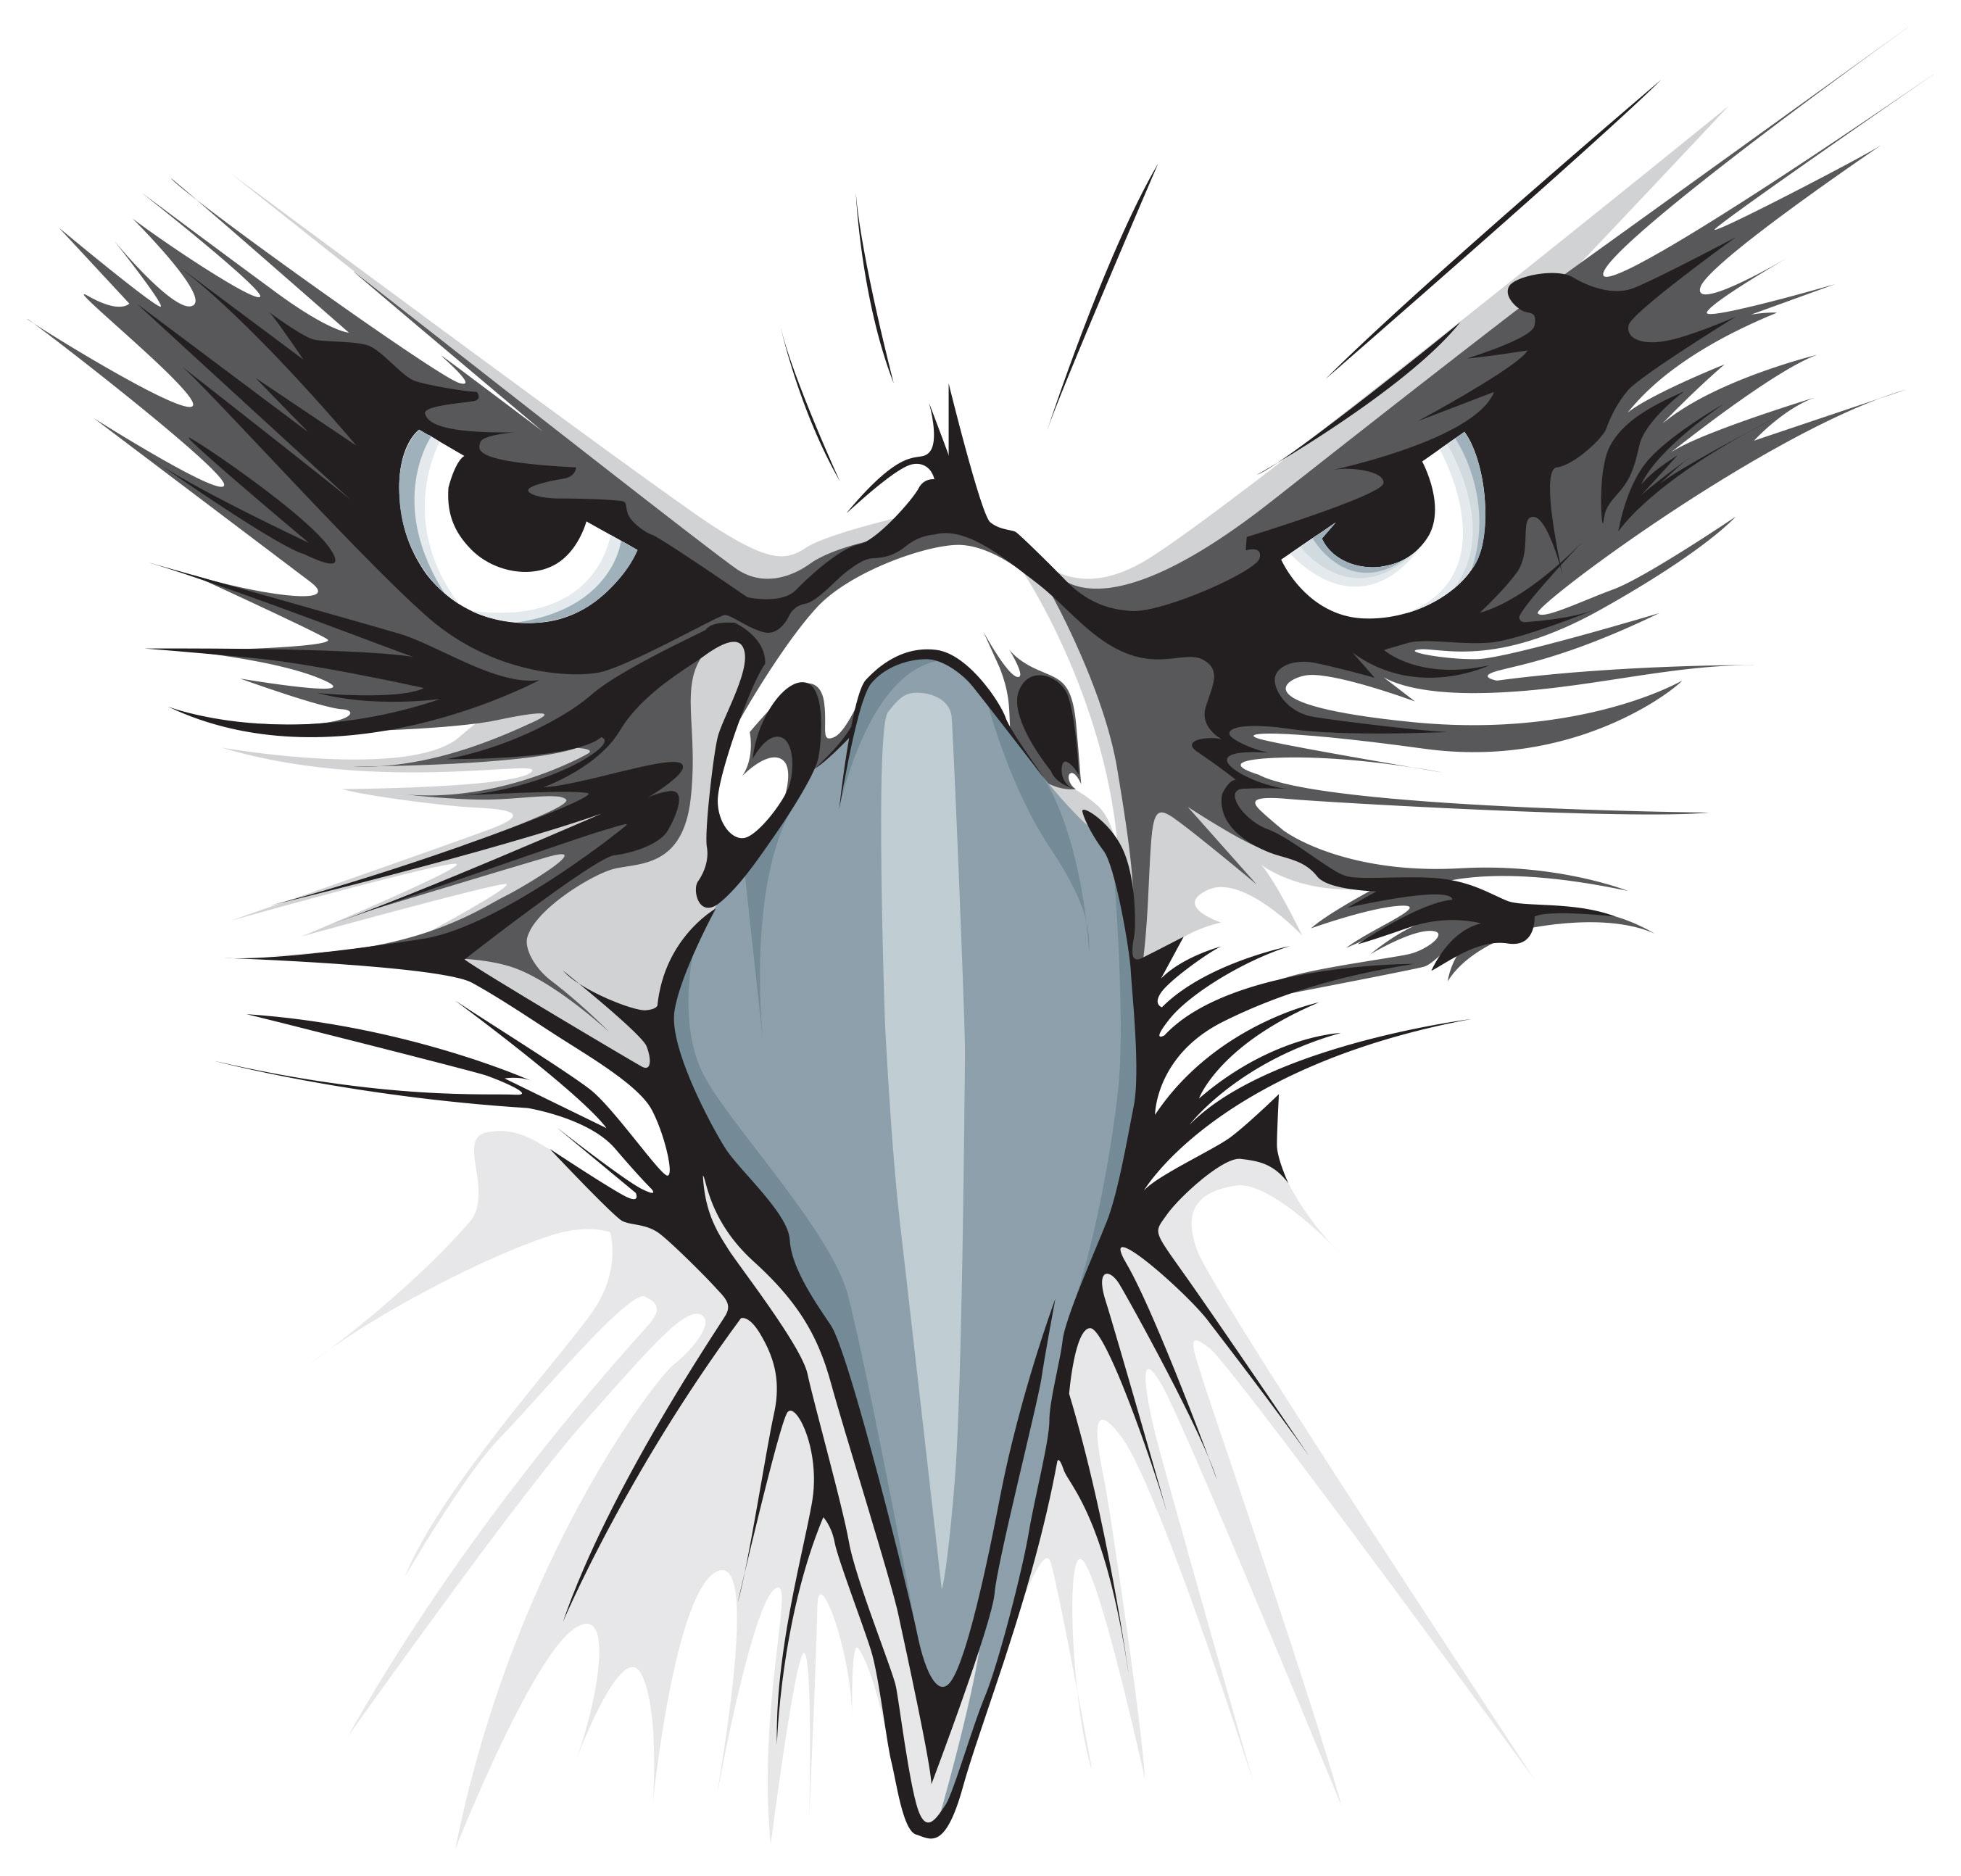 Black and White Eagle Logo - eagle logos images - Fonder.fontanacountryinn.com